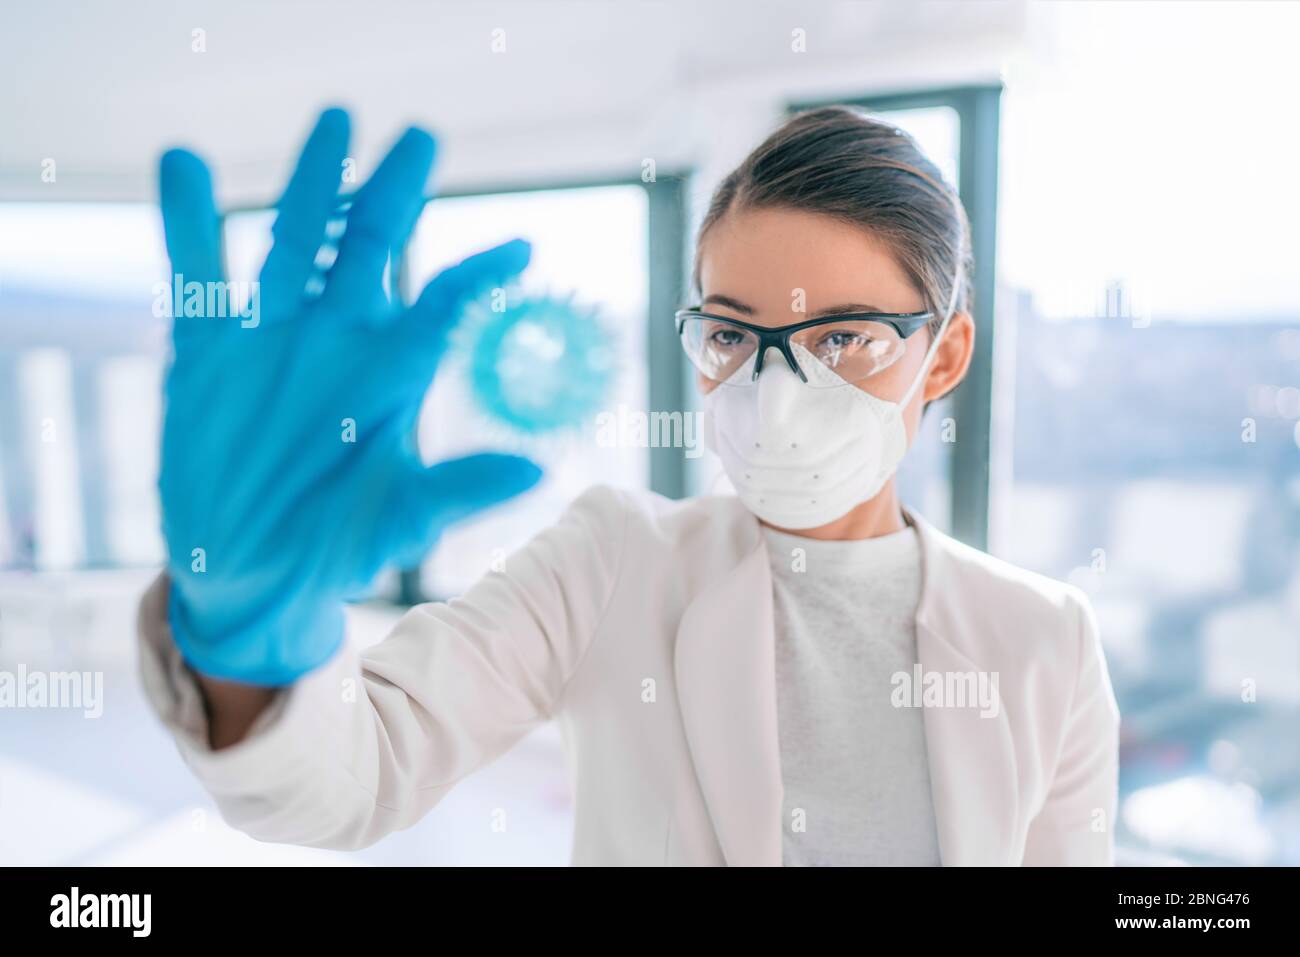 Coronavirus lab research woman researcher finding vaccine cure holding corona virus blue model of COVID-19. Stock Photo